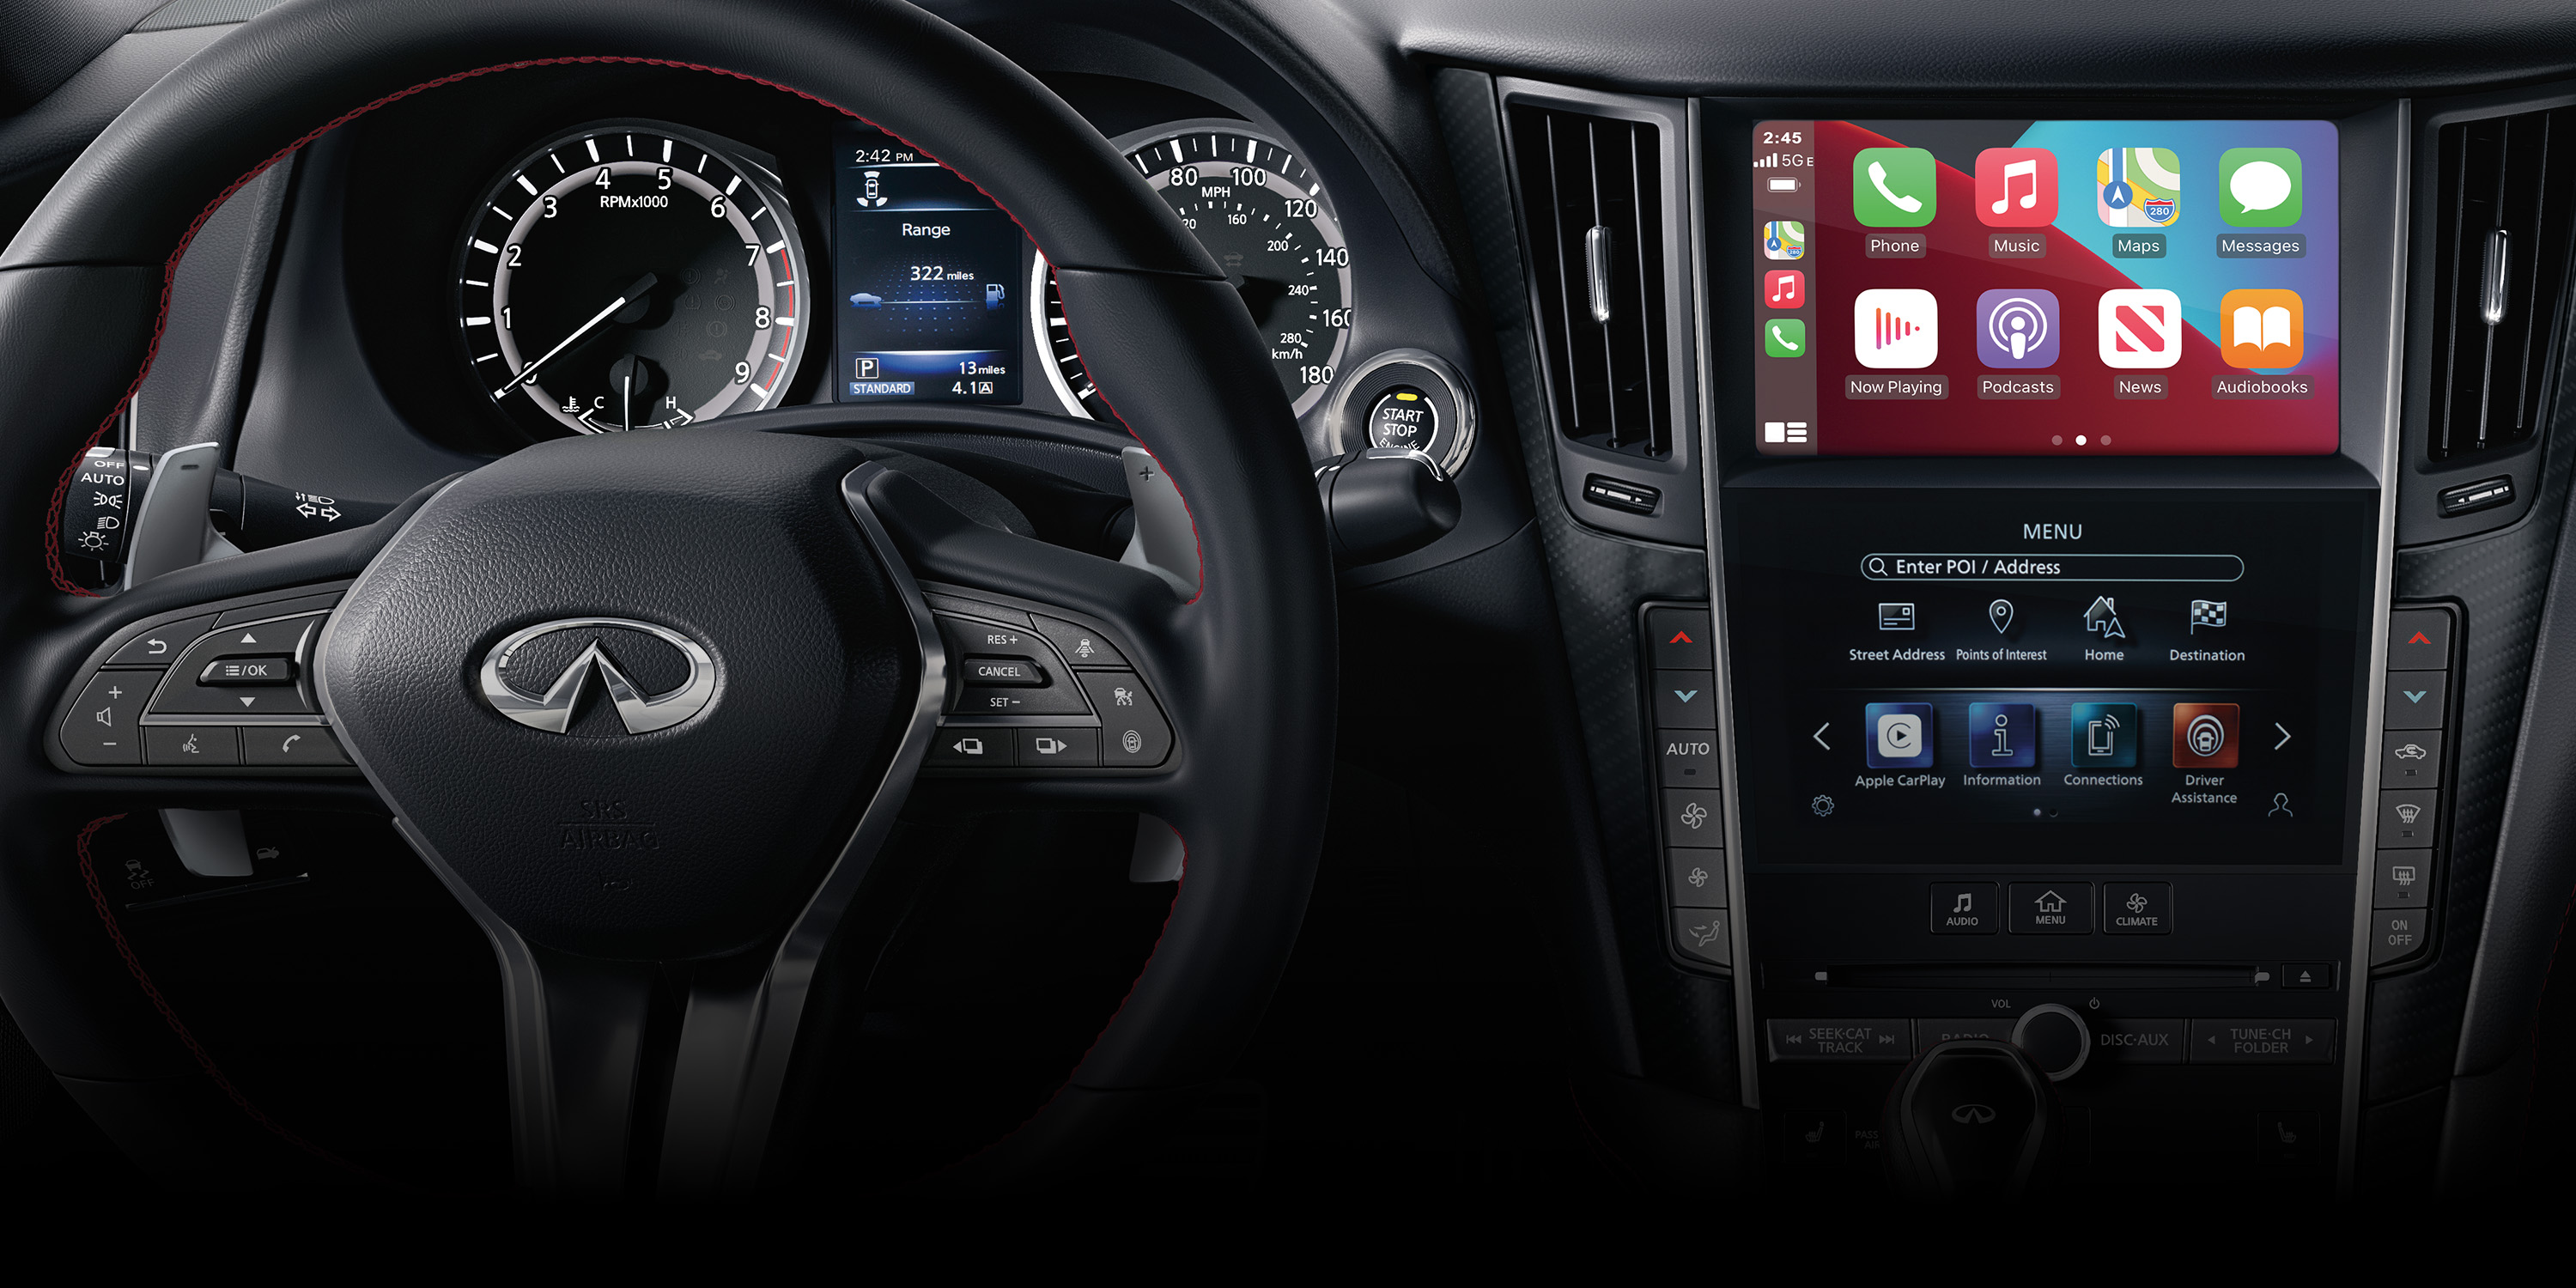 2022 INFINITI Q60 car's Apple Carplay or Android Auto.